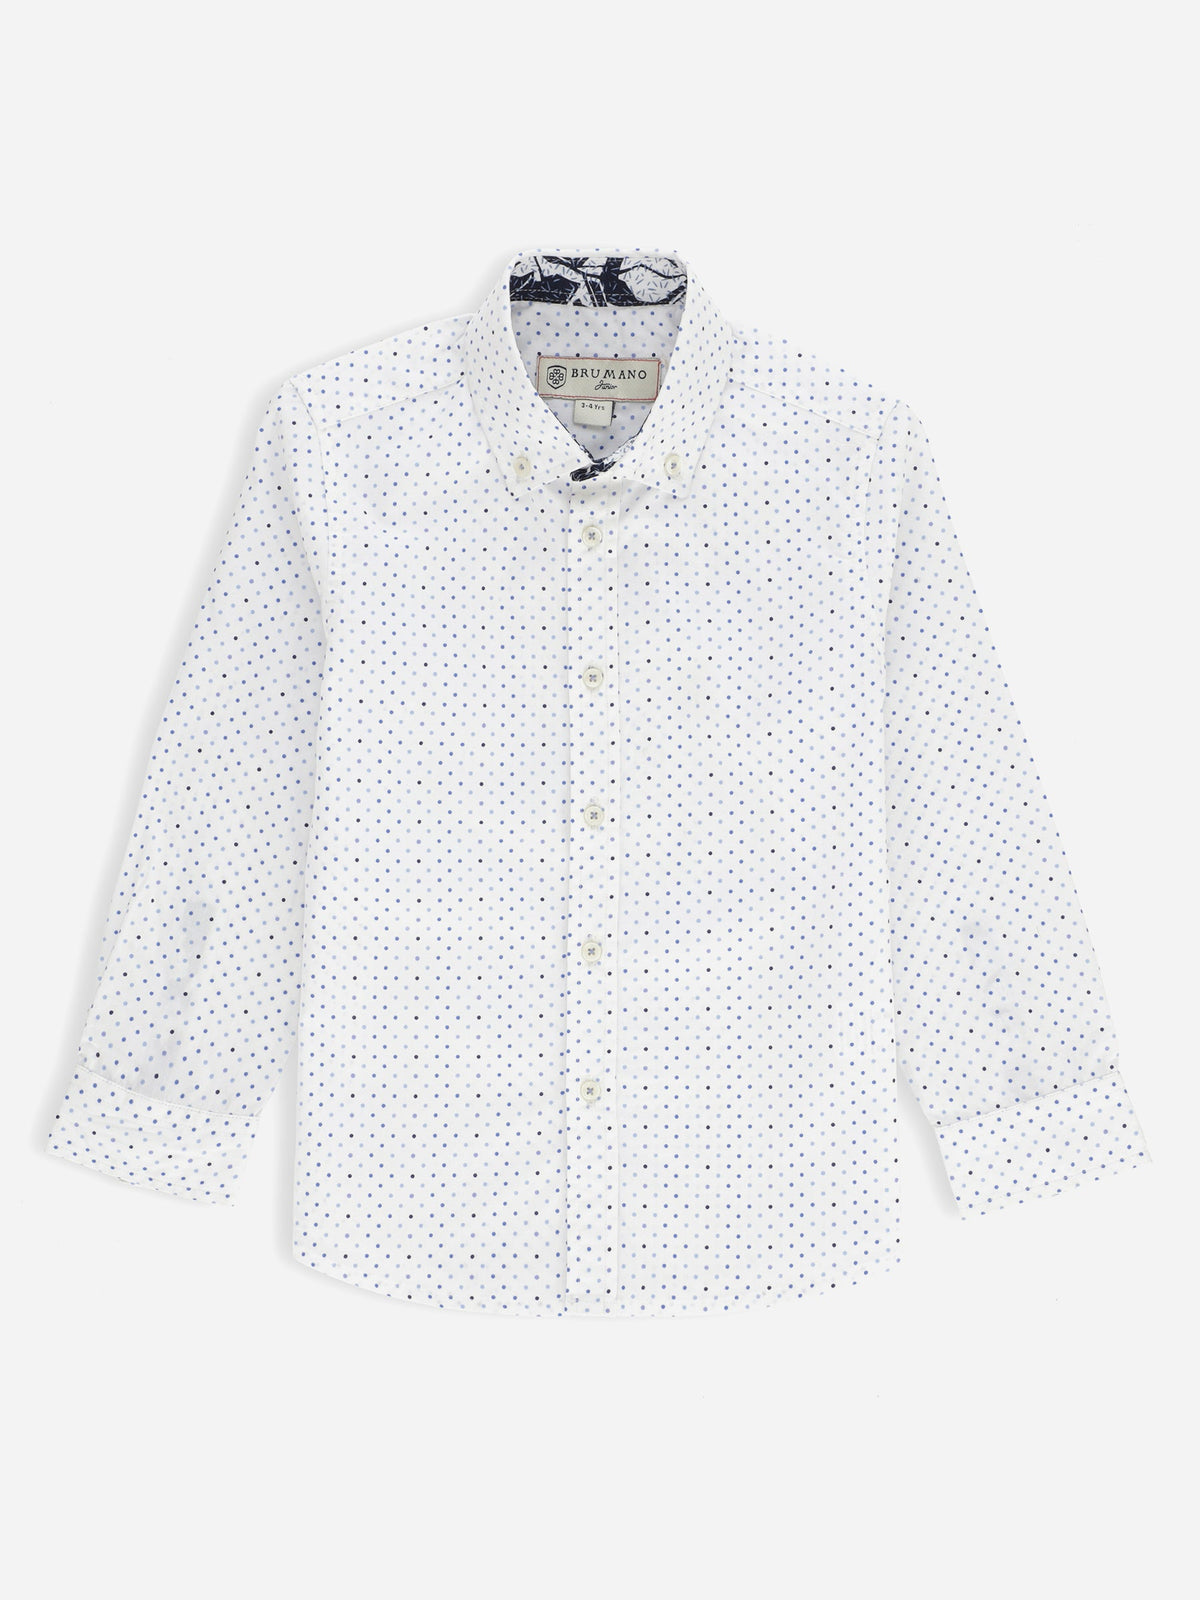 White Polka Dot Printed Casual Shirt Brumano Pakistan